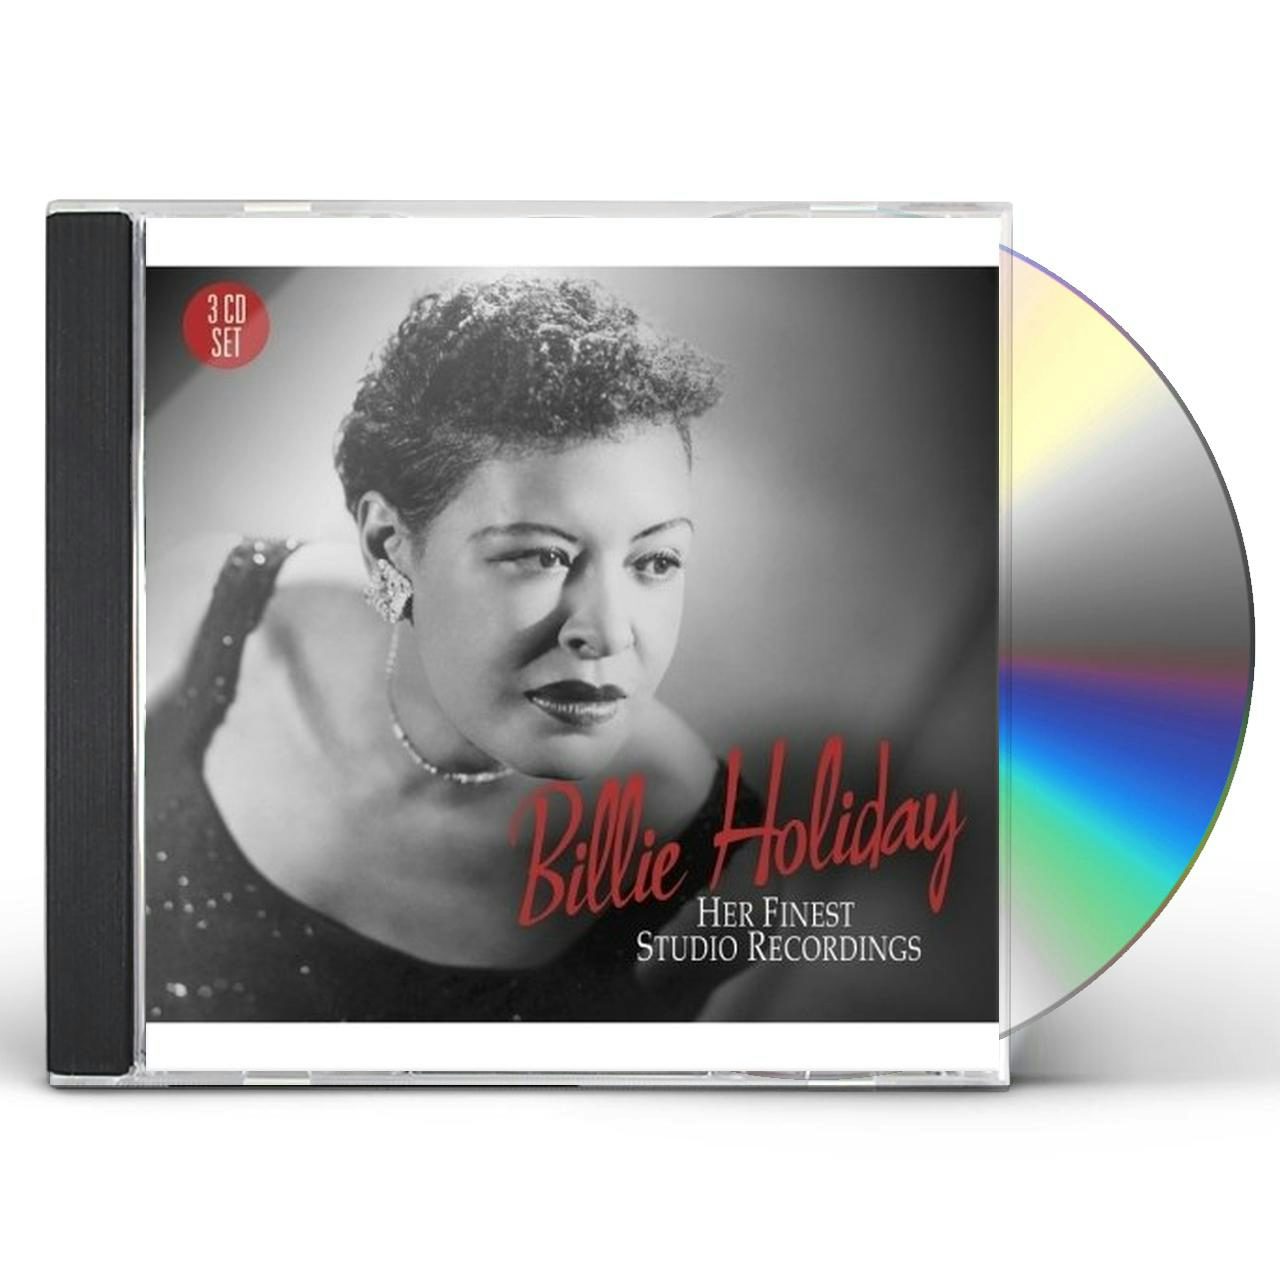 her finest studio recordings cd - Billie Holiday